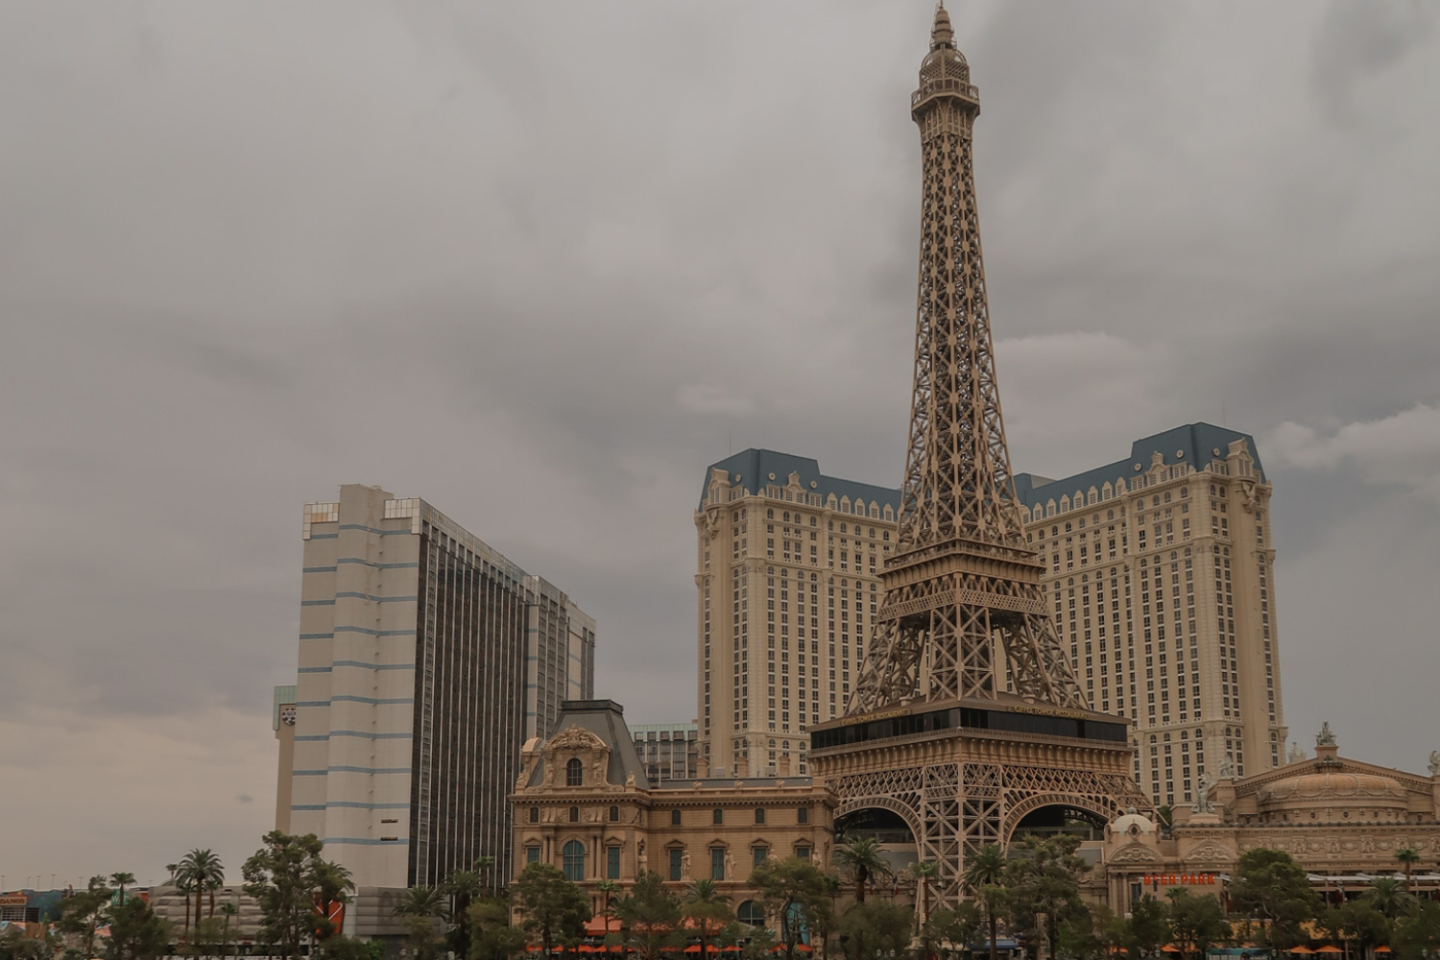 Paris Las Vegas on X: While our Eiffel Tower again lights up the